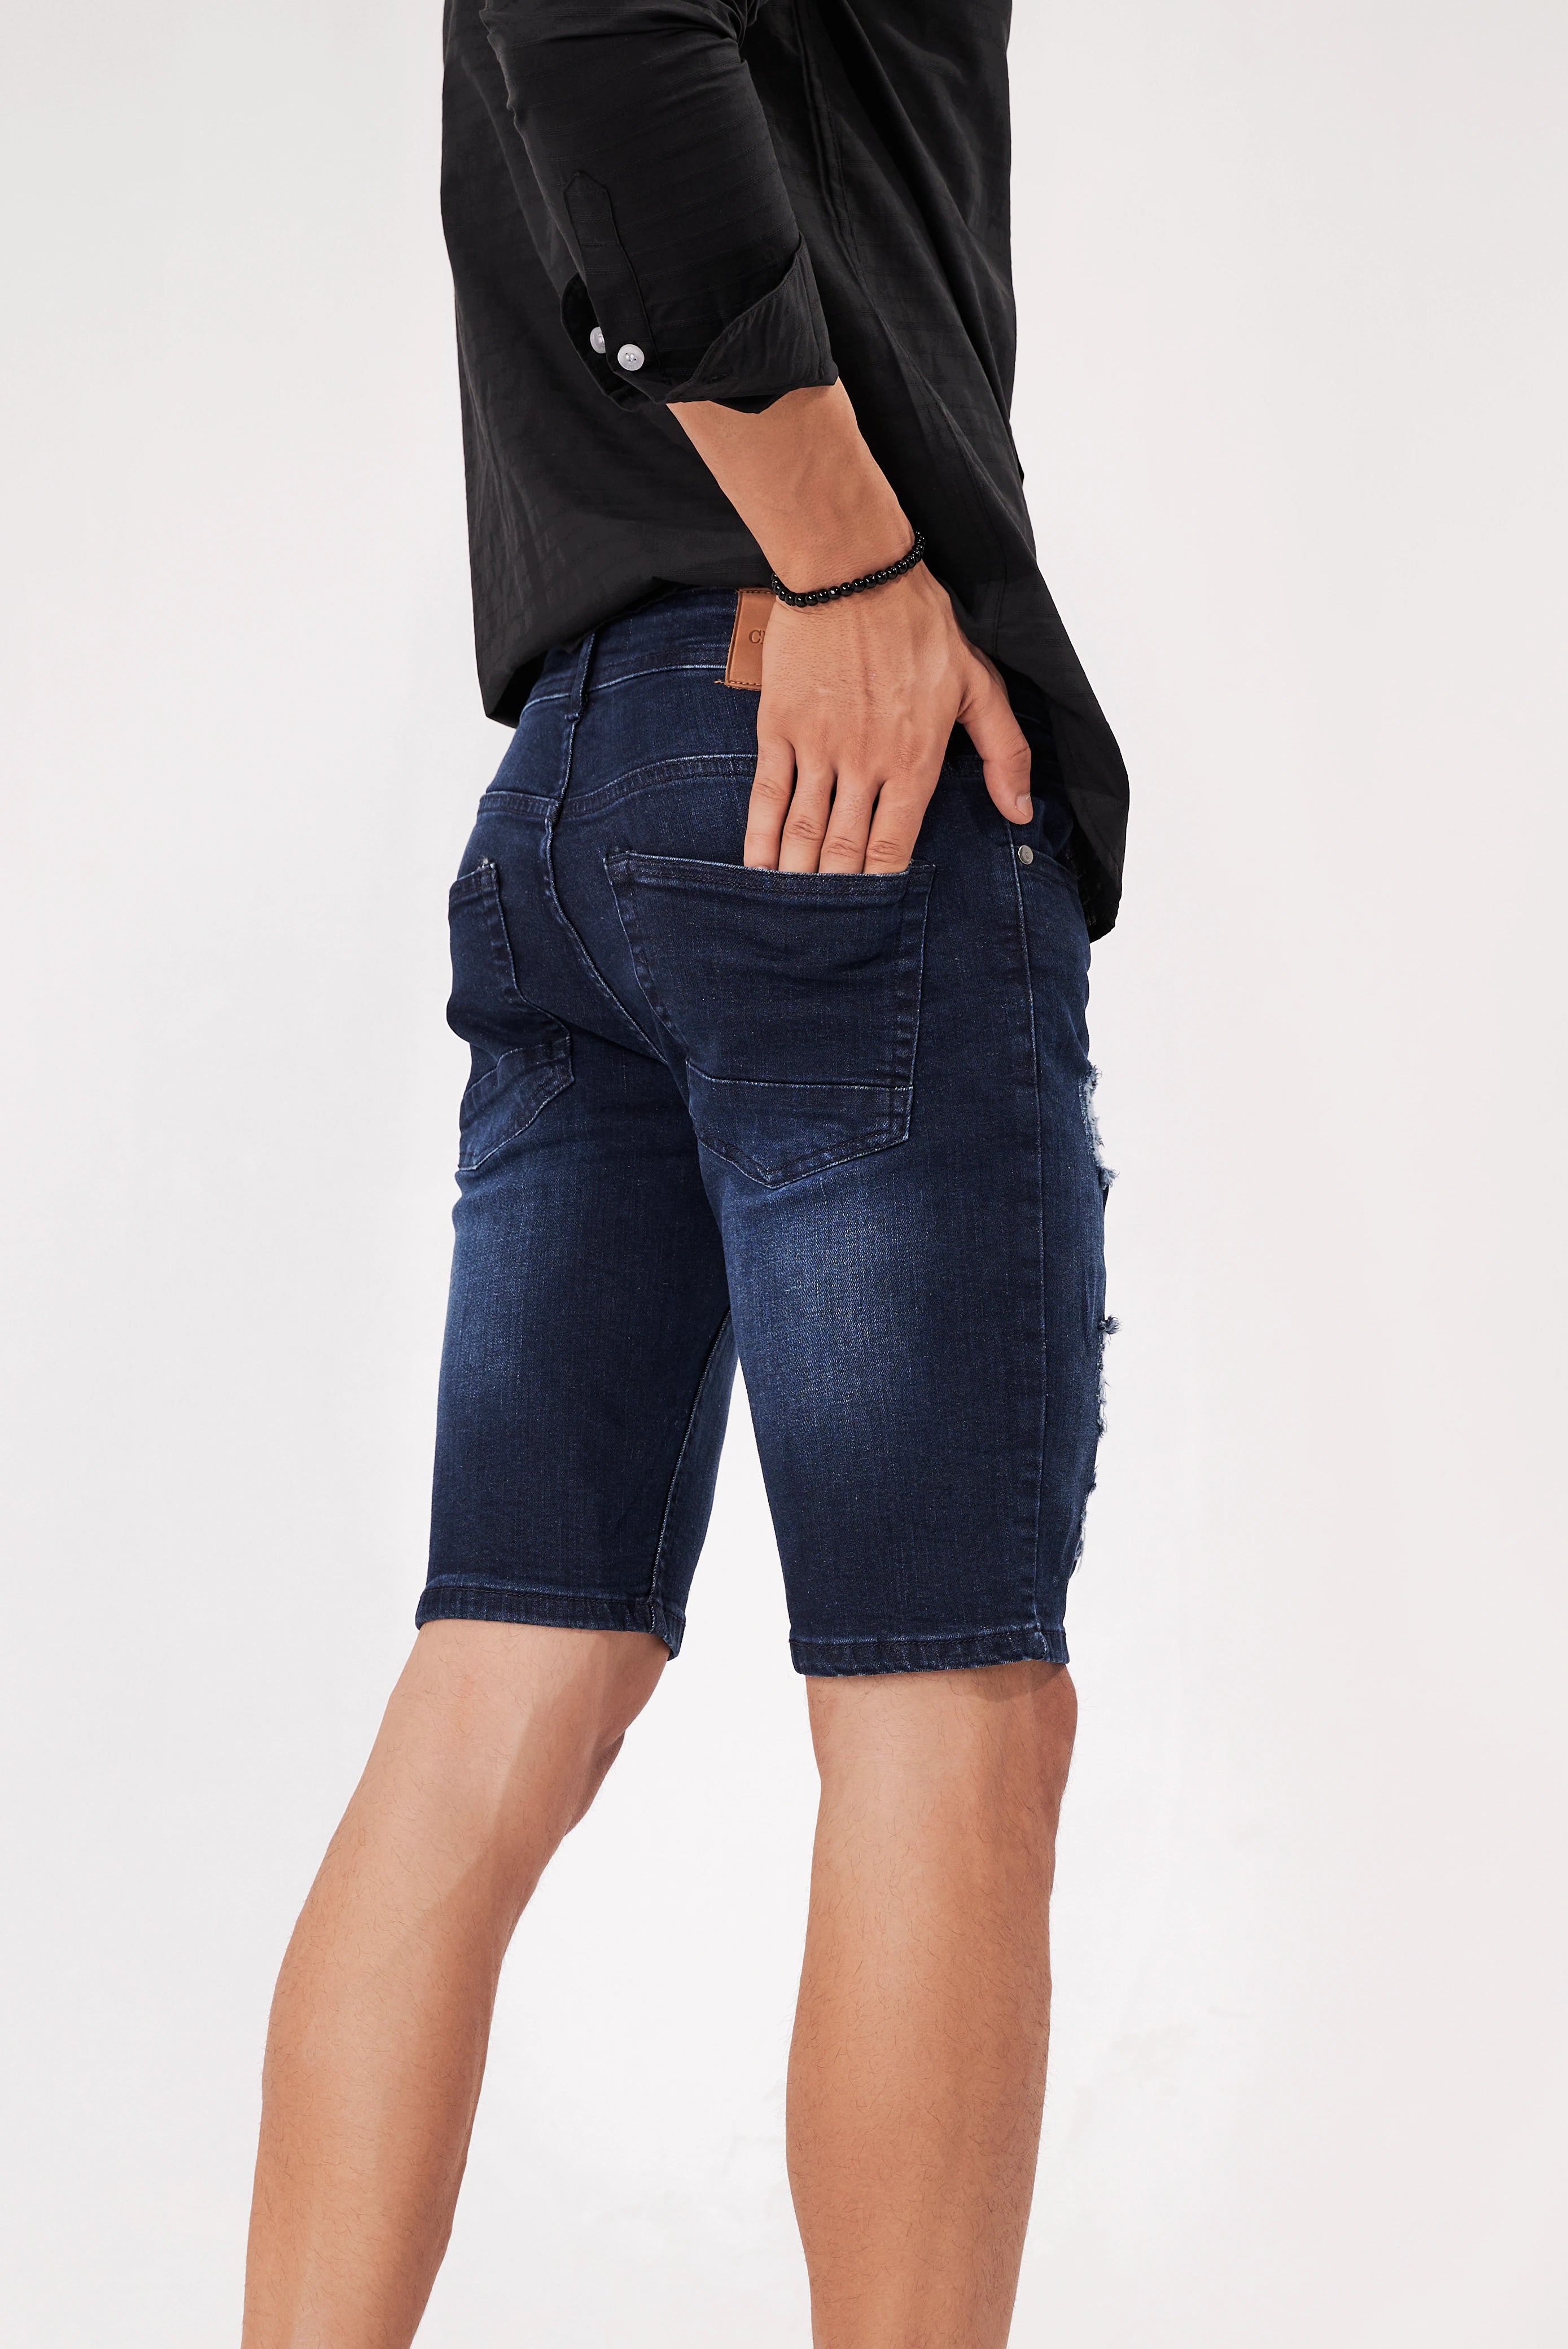 Mens denim jeans and explore our classic mens denim shorts